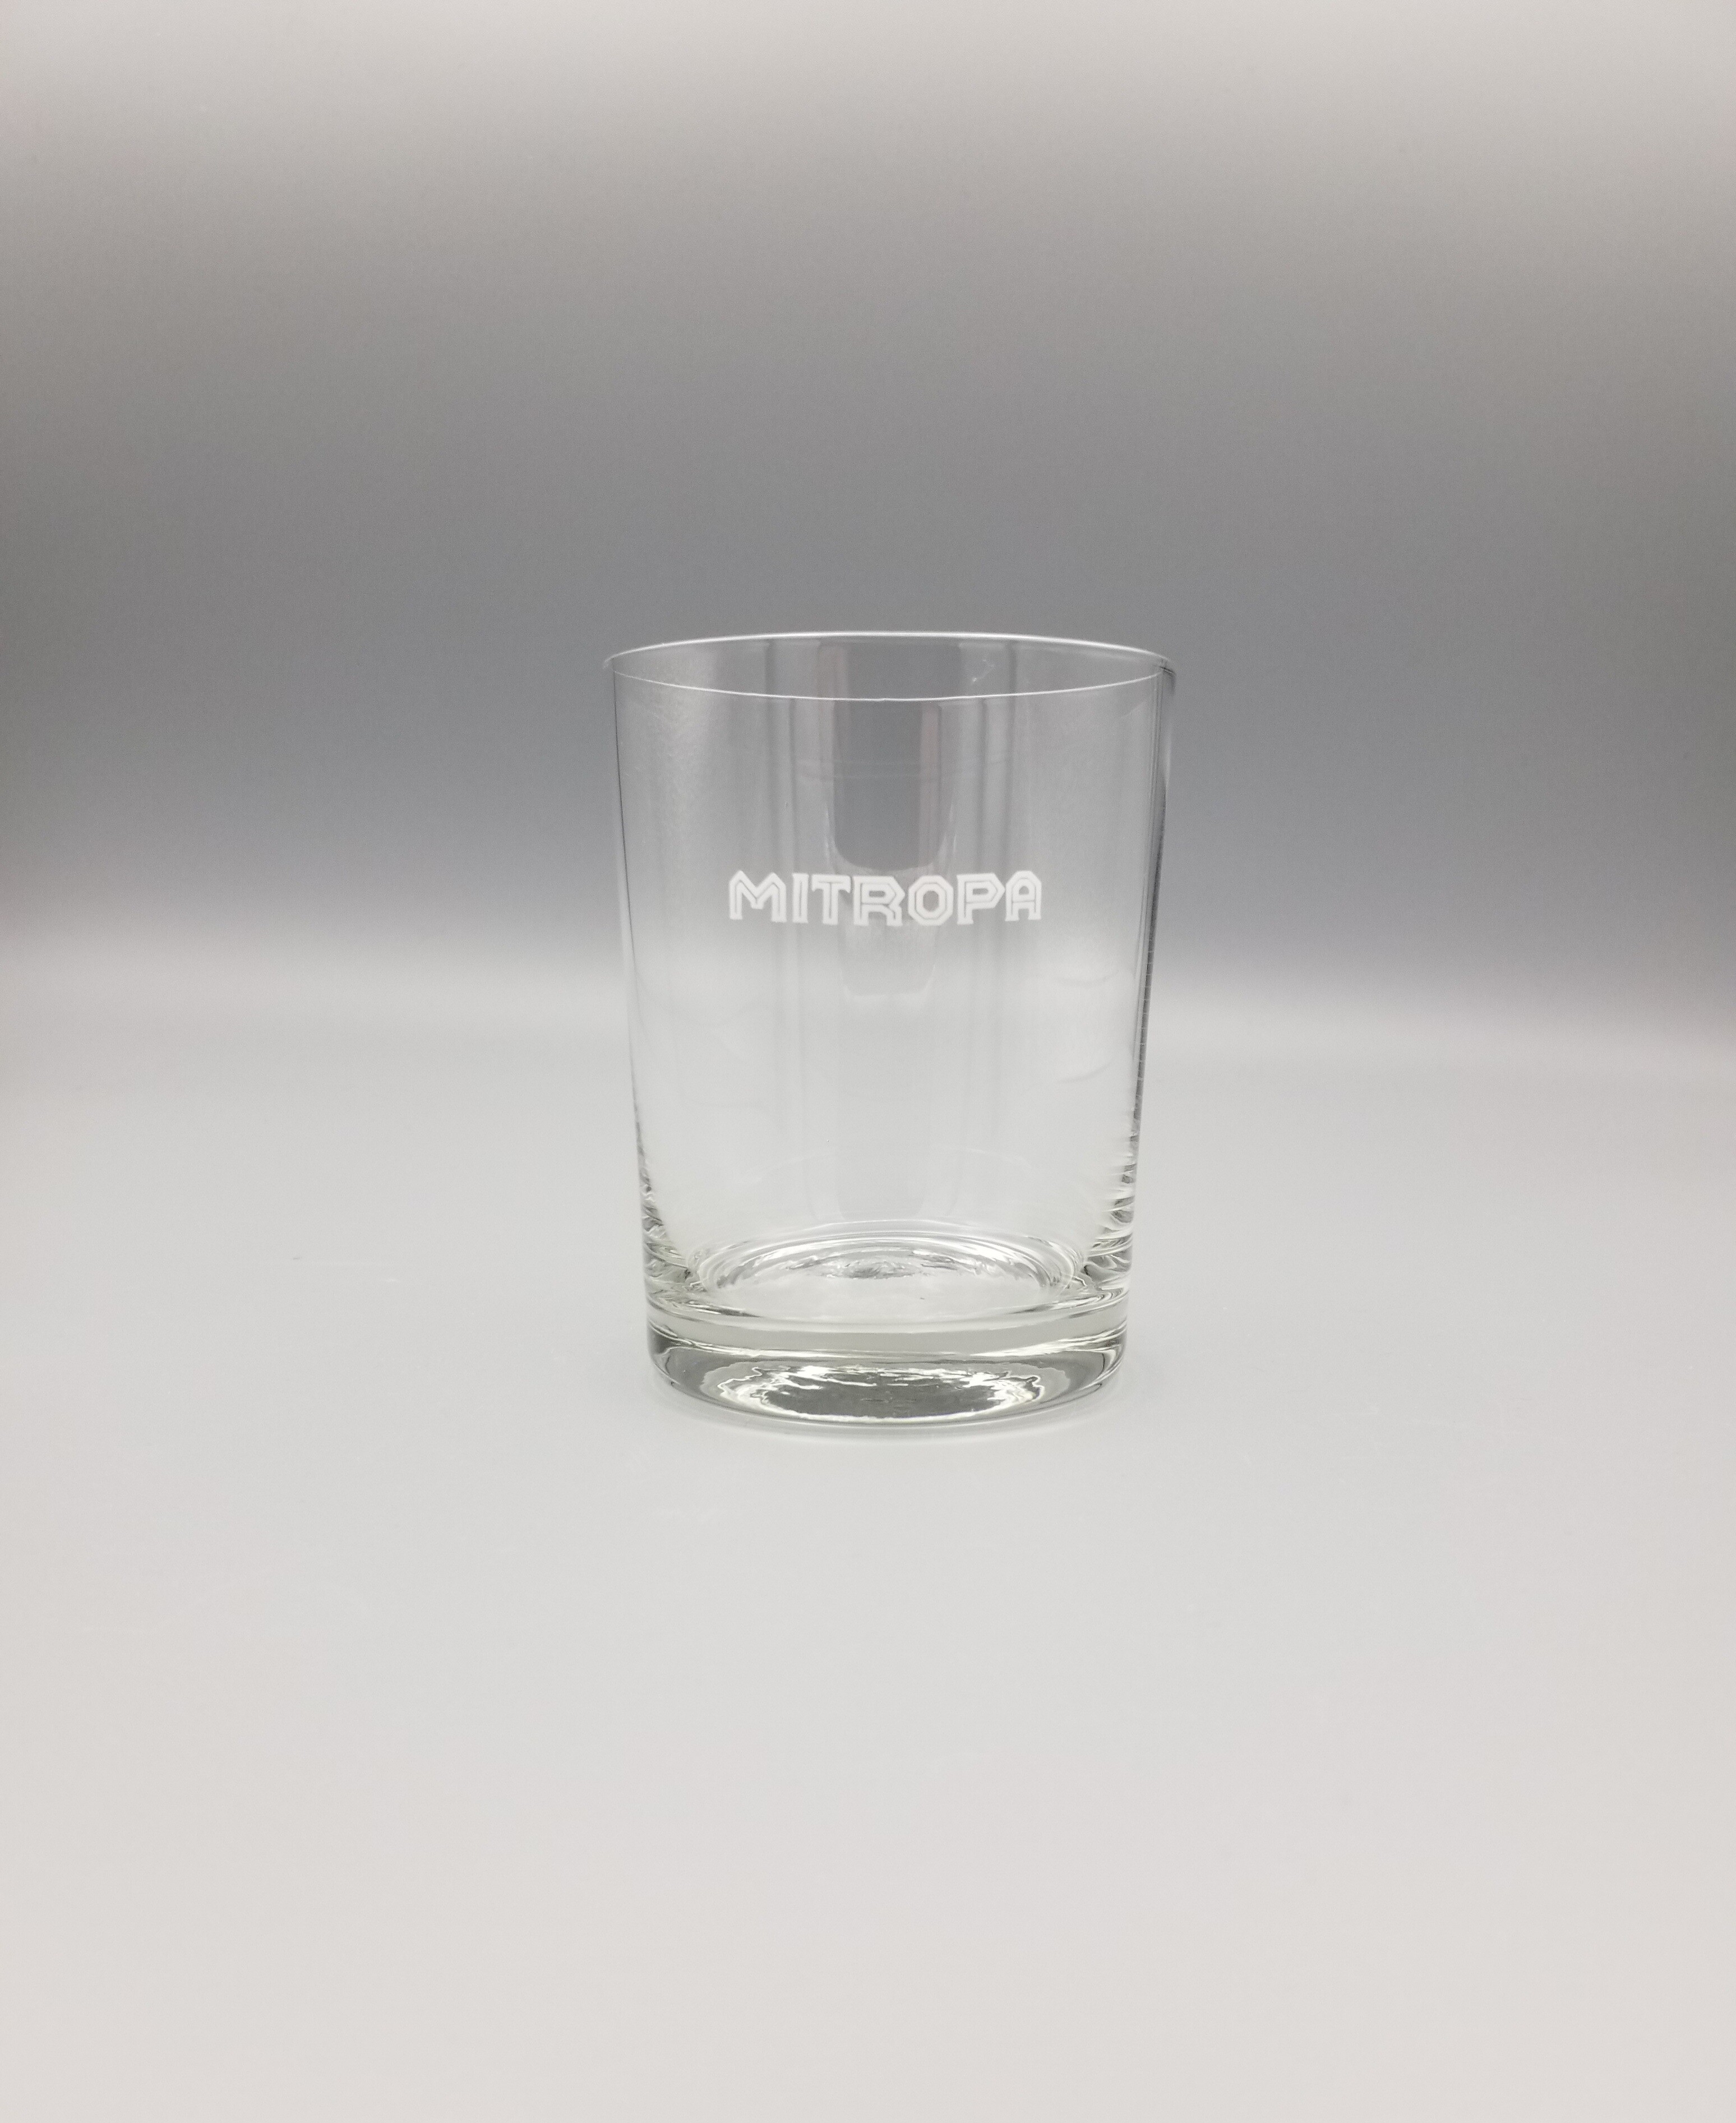 MITROPA Whiskyglas (Mobile Welten e.V. CC BY-SA)